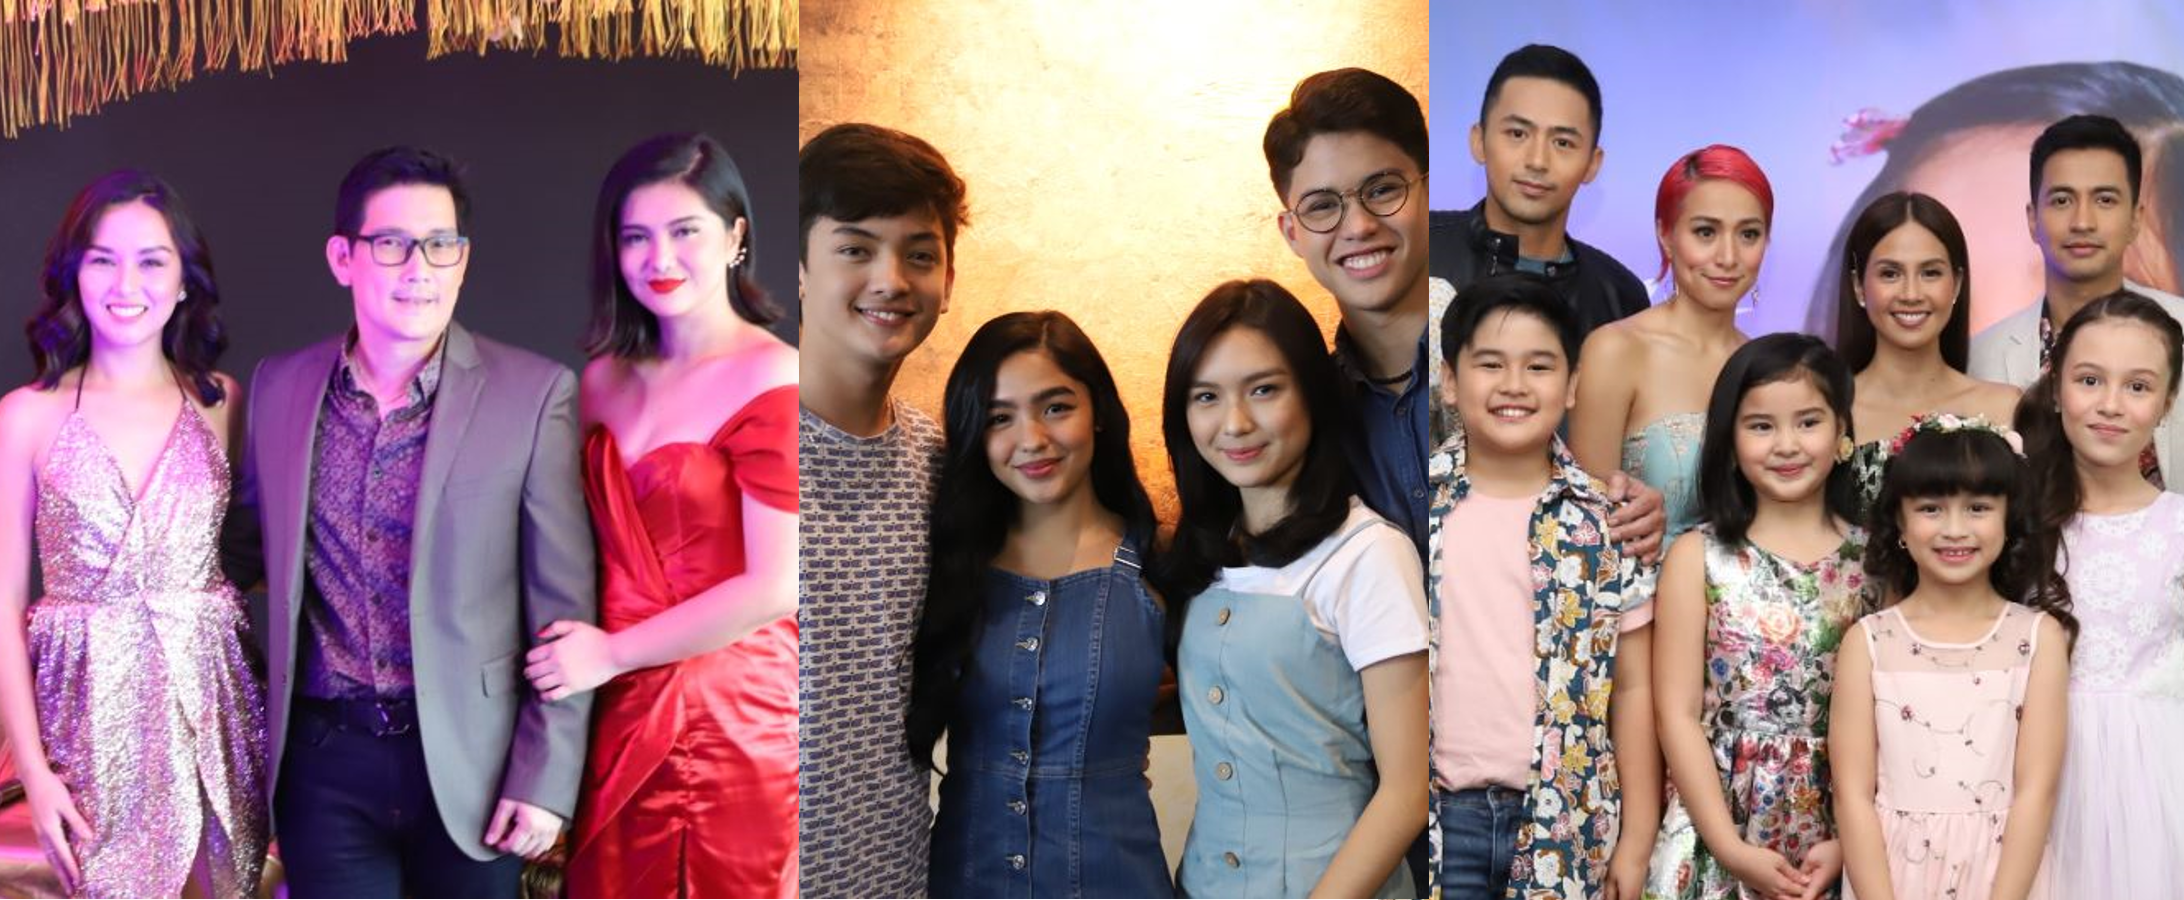 ABS-CBN Regional brings "Kadenang Ginto," "Nang Ngumiti ang Langit" stars to Kadayawan Festival